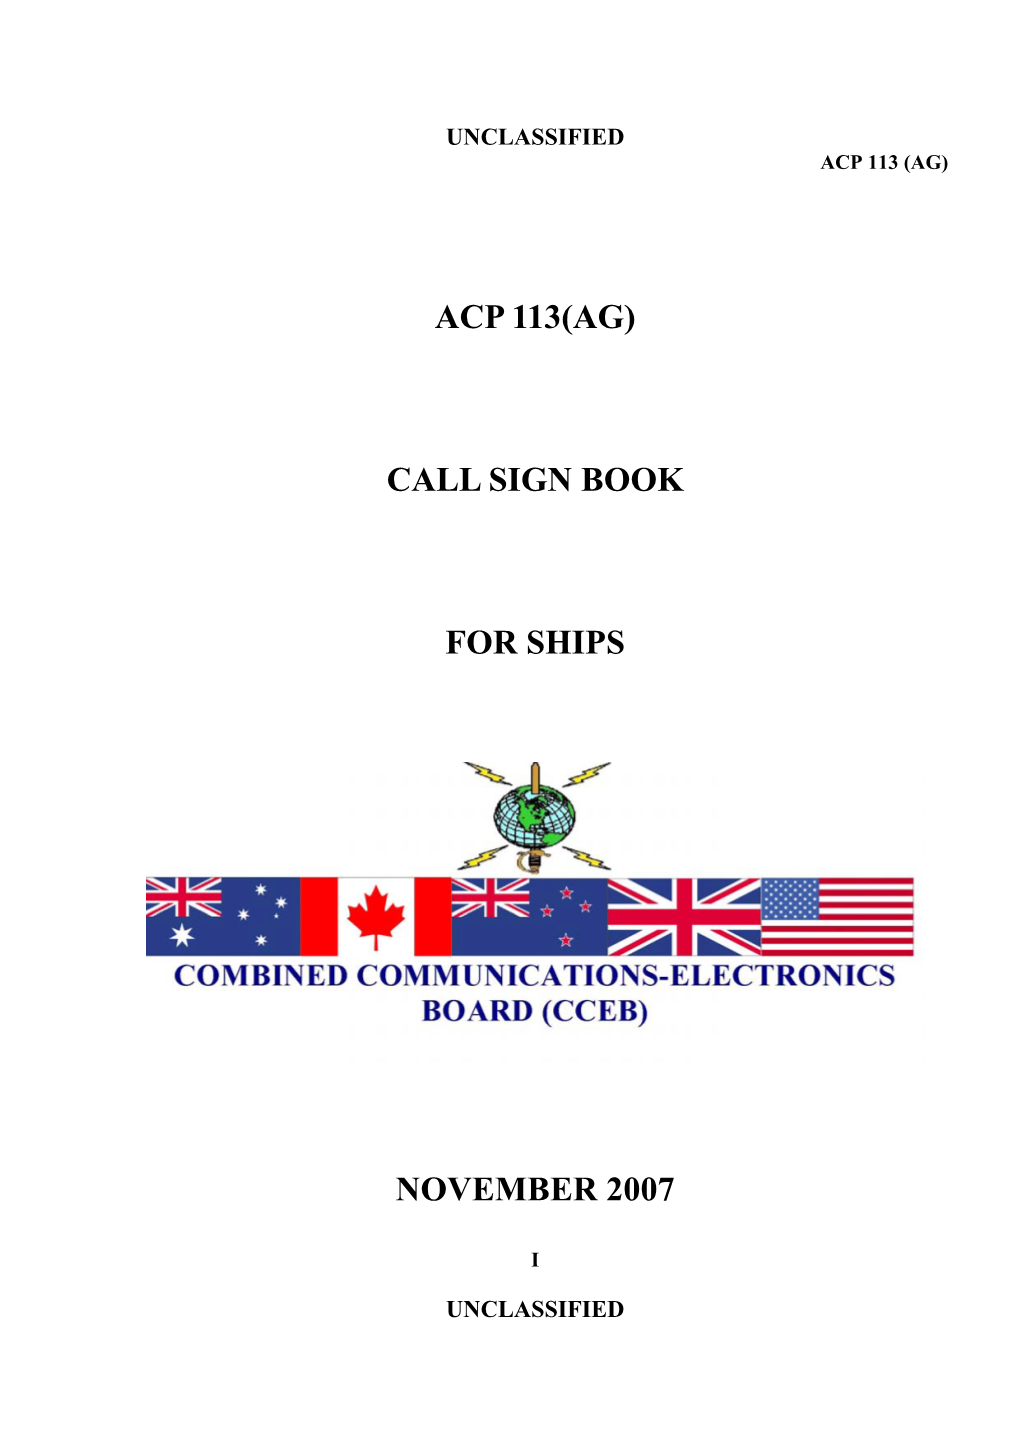 Acp 113(Ag) Call Sign Book for Ships November 2007